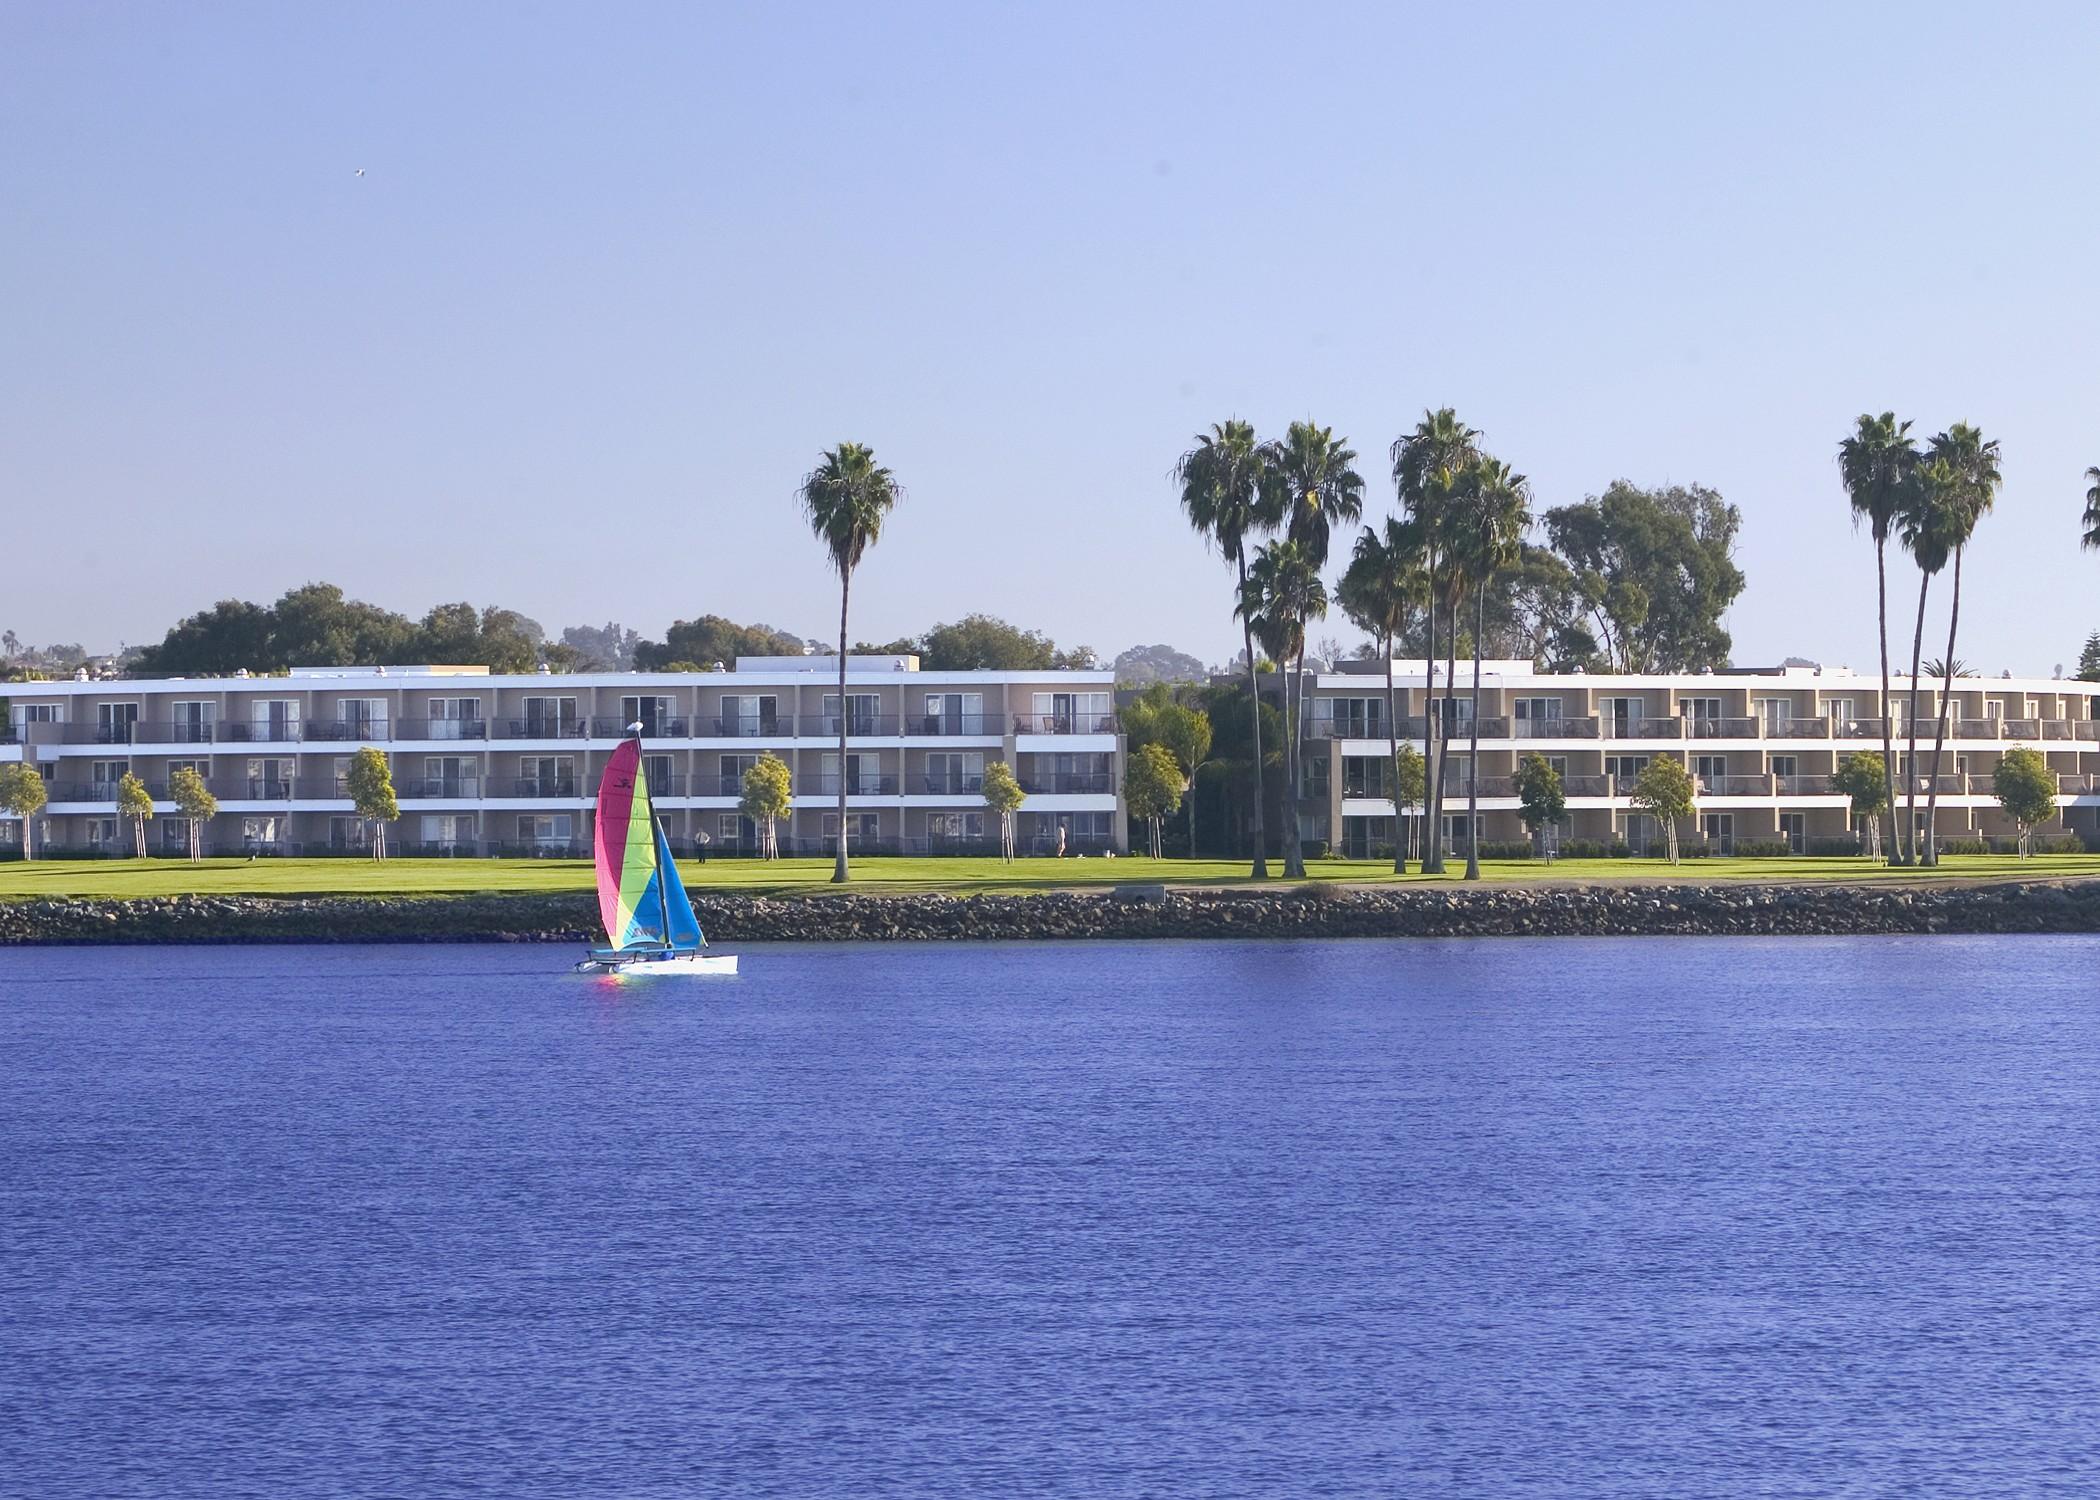 The Dana On Mission Bay Hotel San Diego Exterior photo